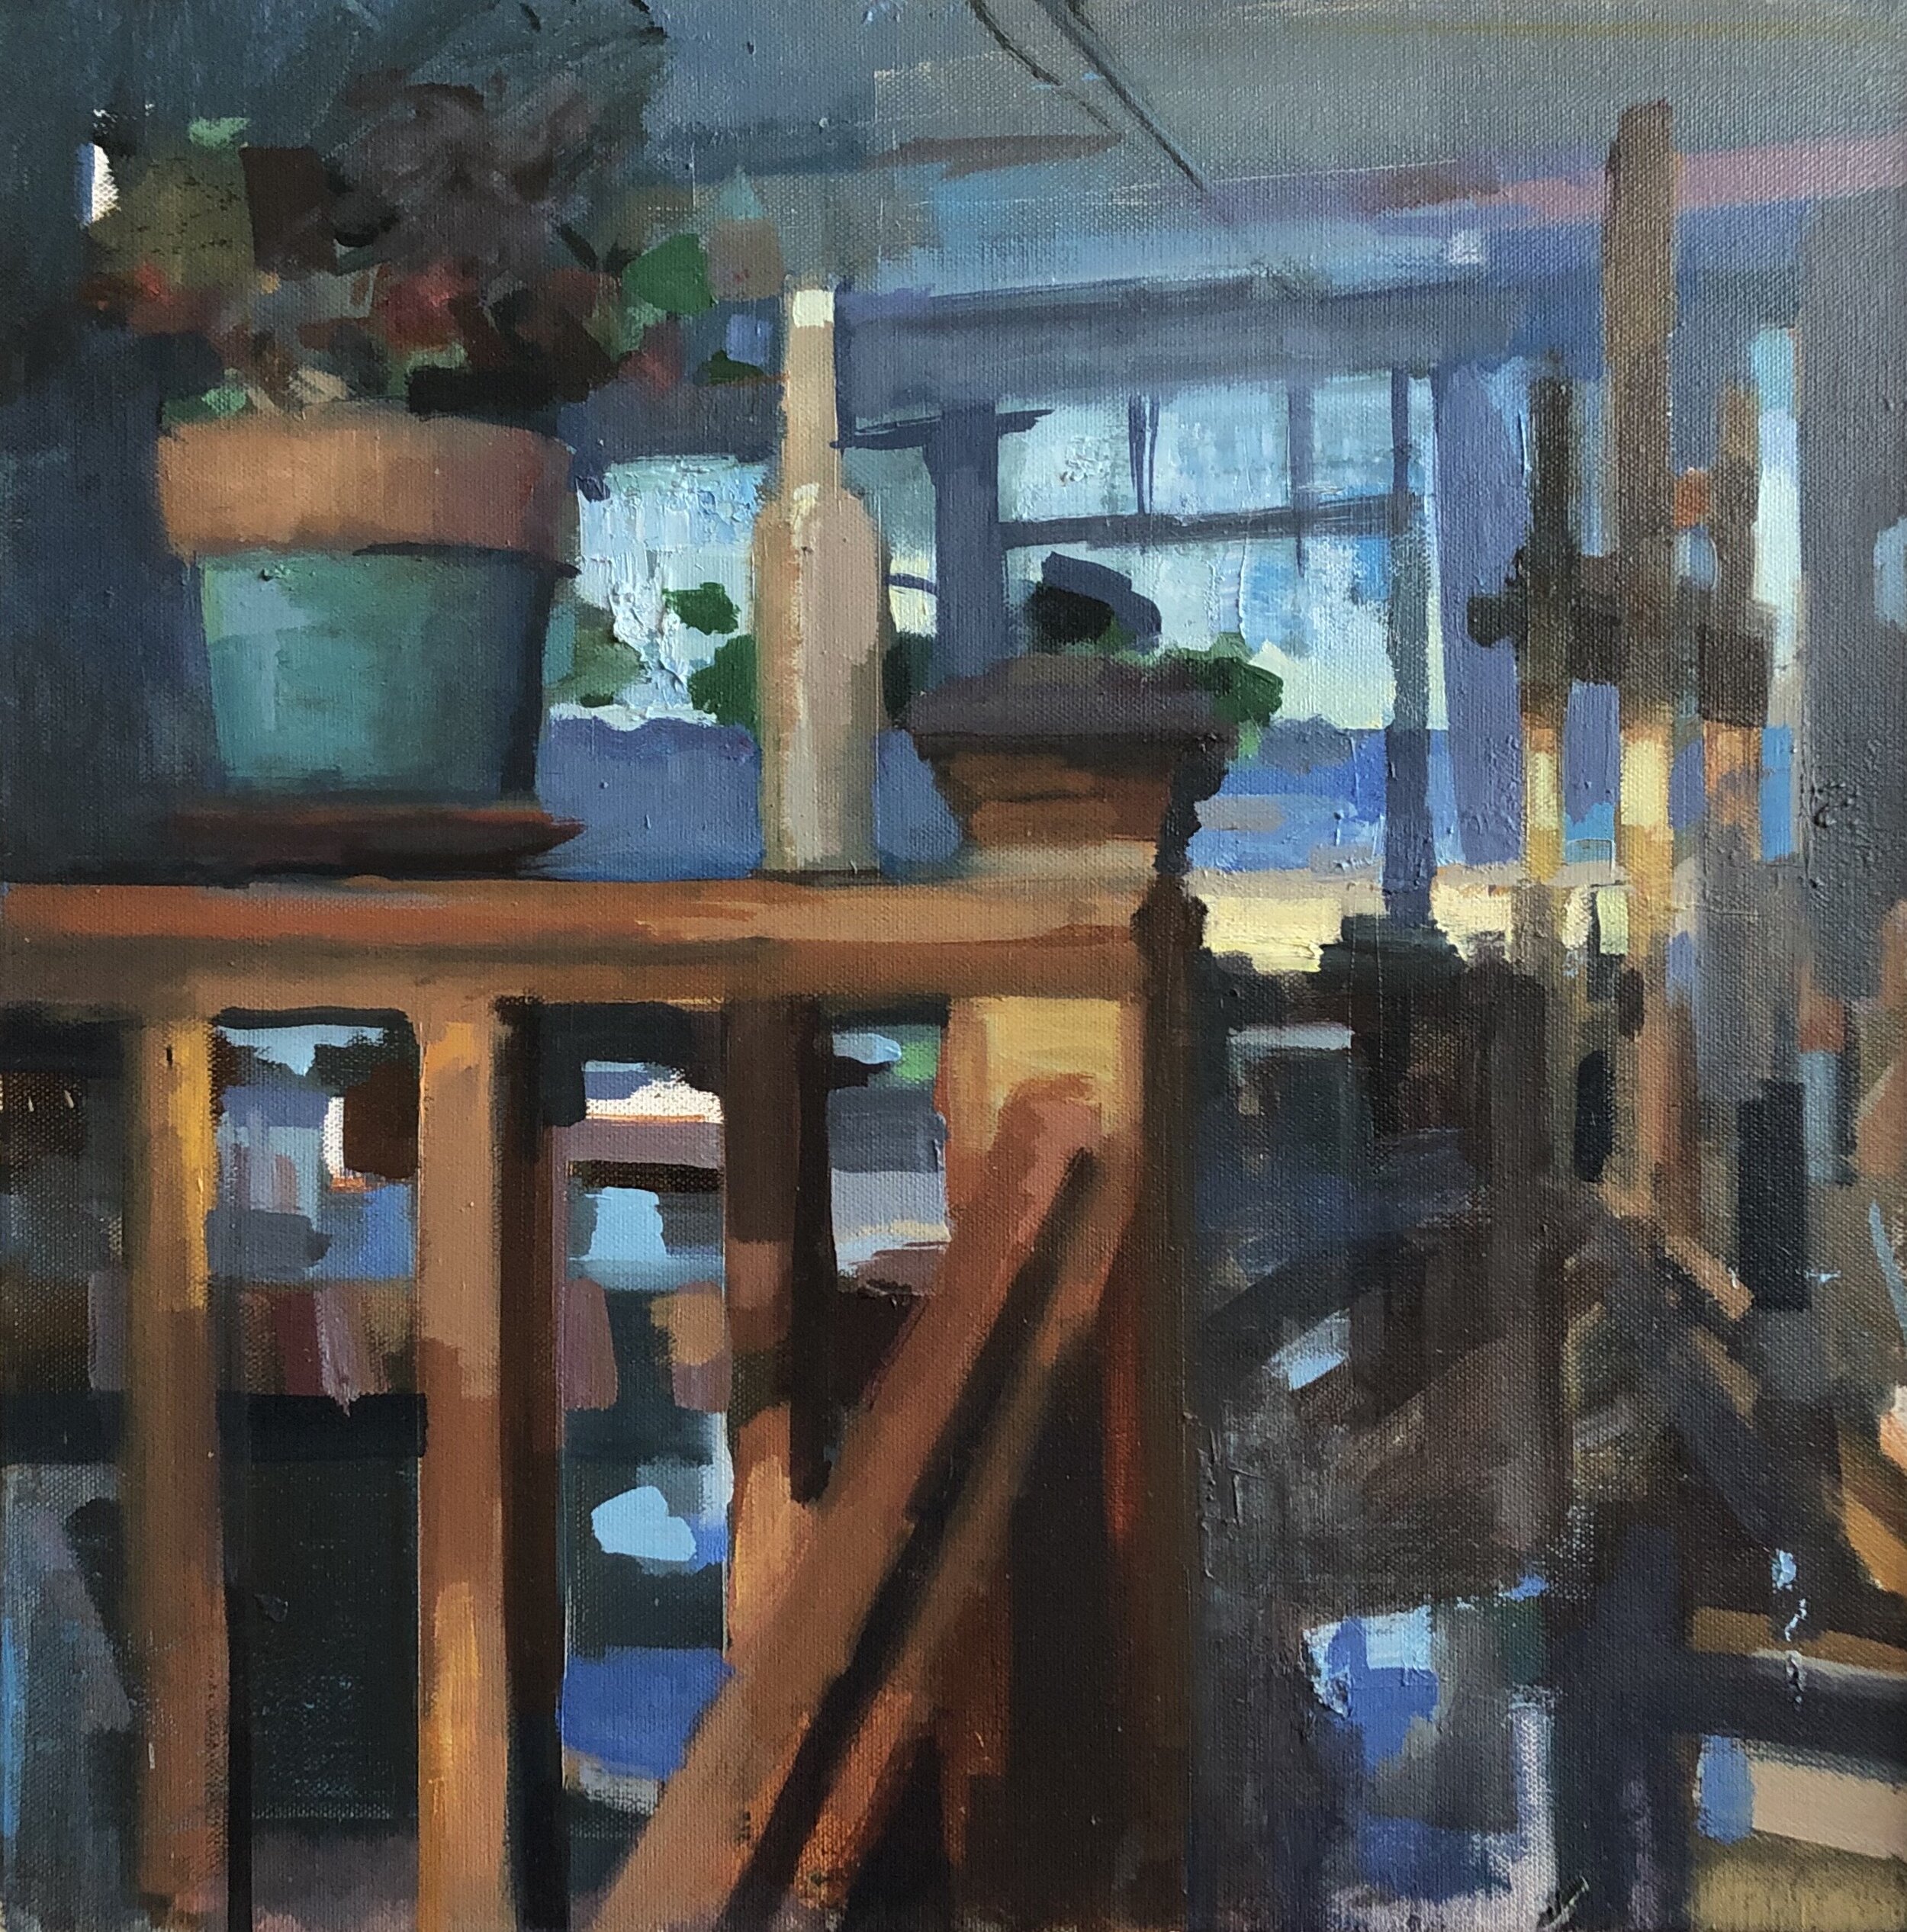 Oakland Studio #22, oil on canvas, 16x16, 2019, available, framed